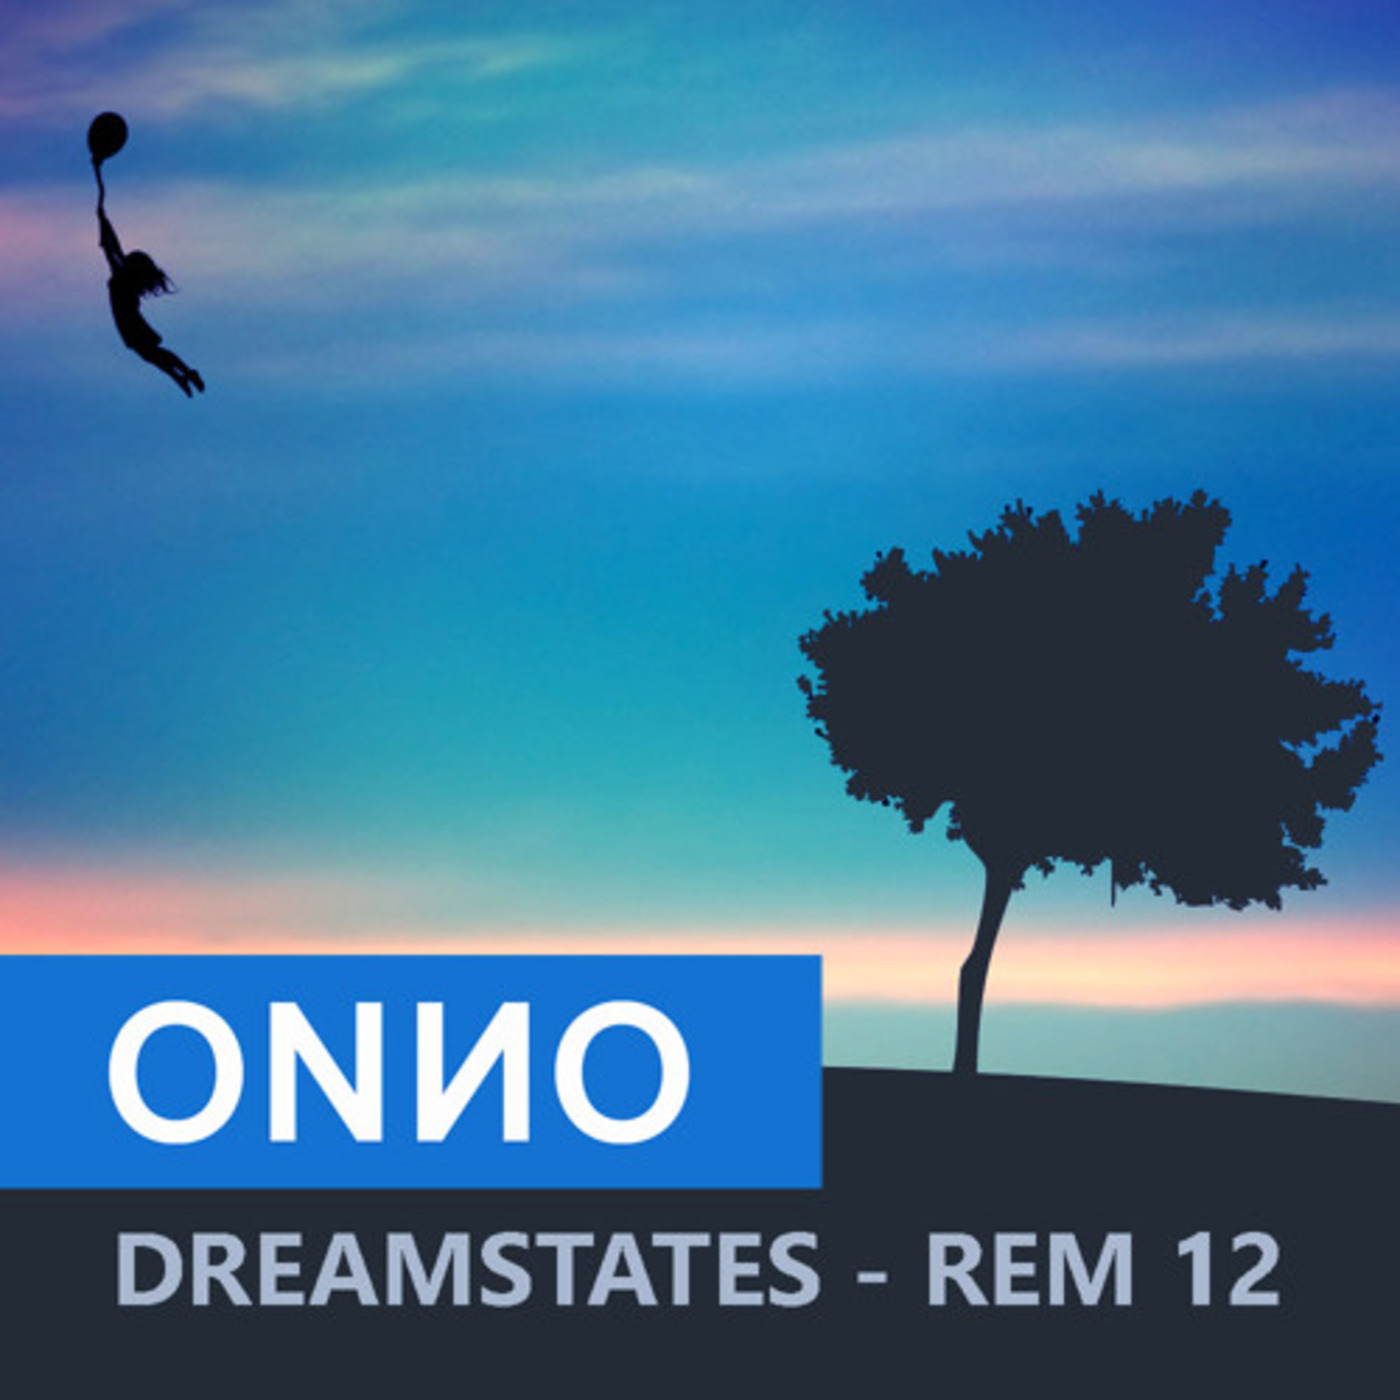 Onno Boomstra - DREAMSTATES - REM 12